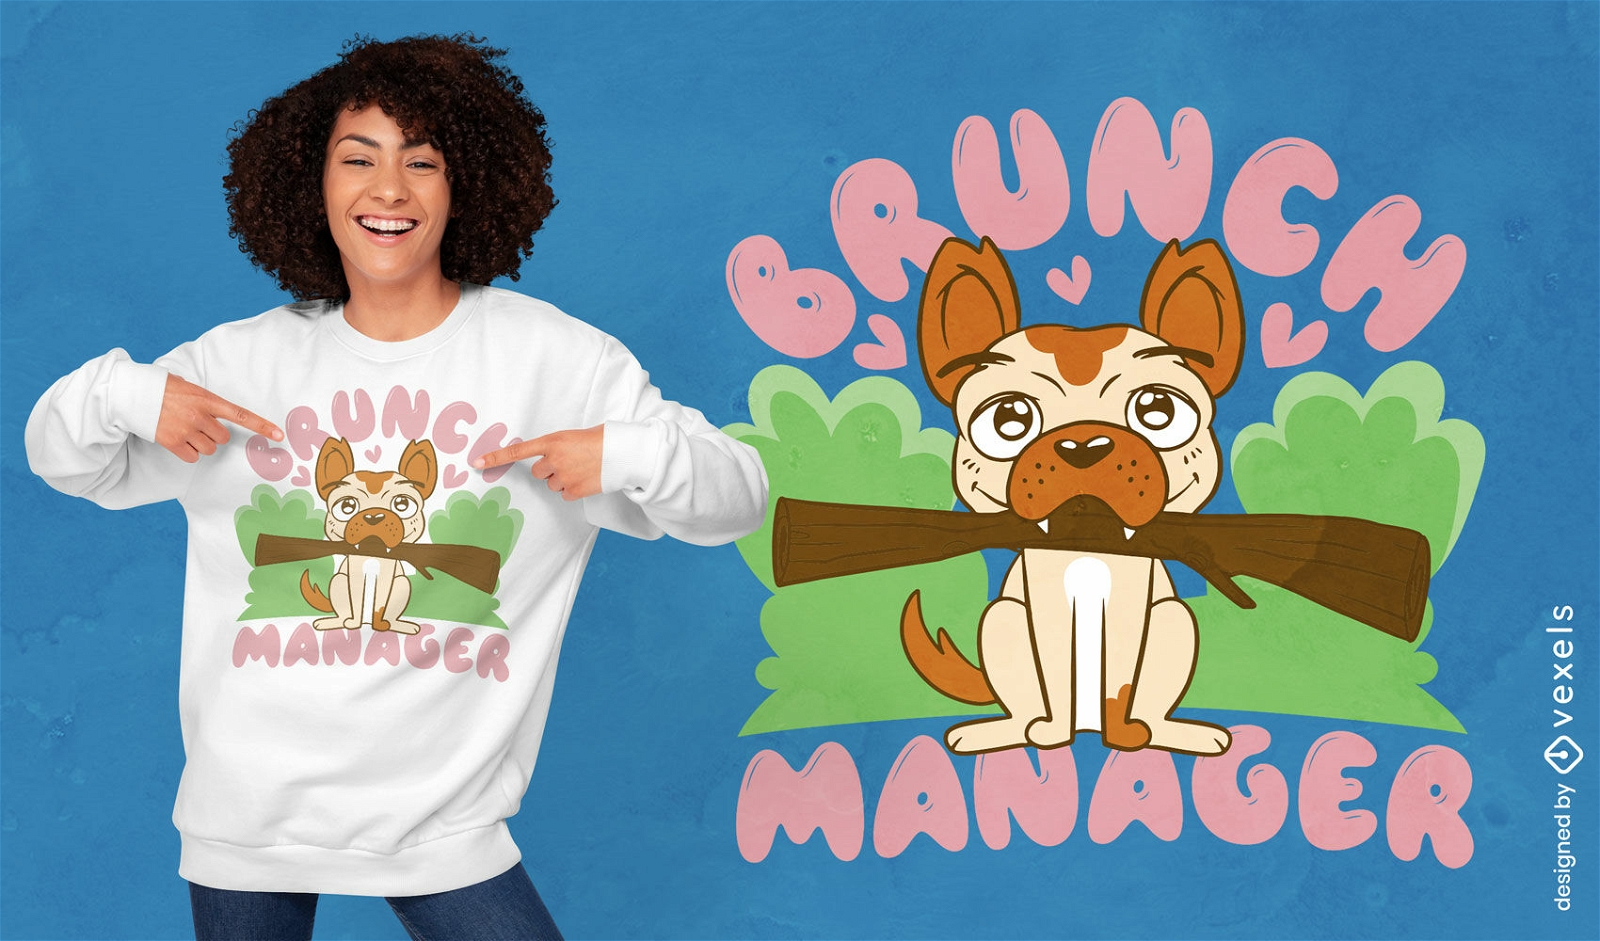 Brunch manager funny dog cartoon t-shirt design